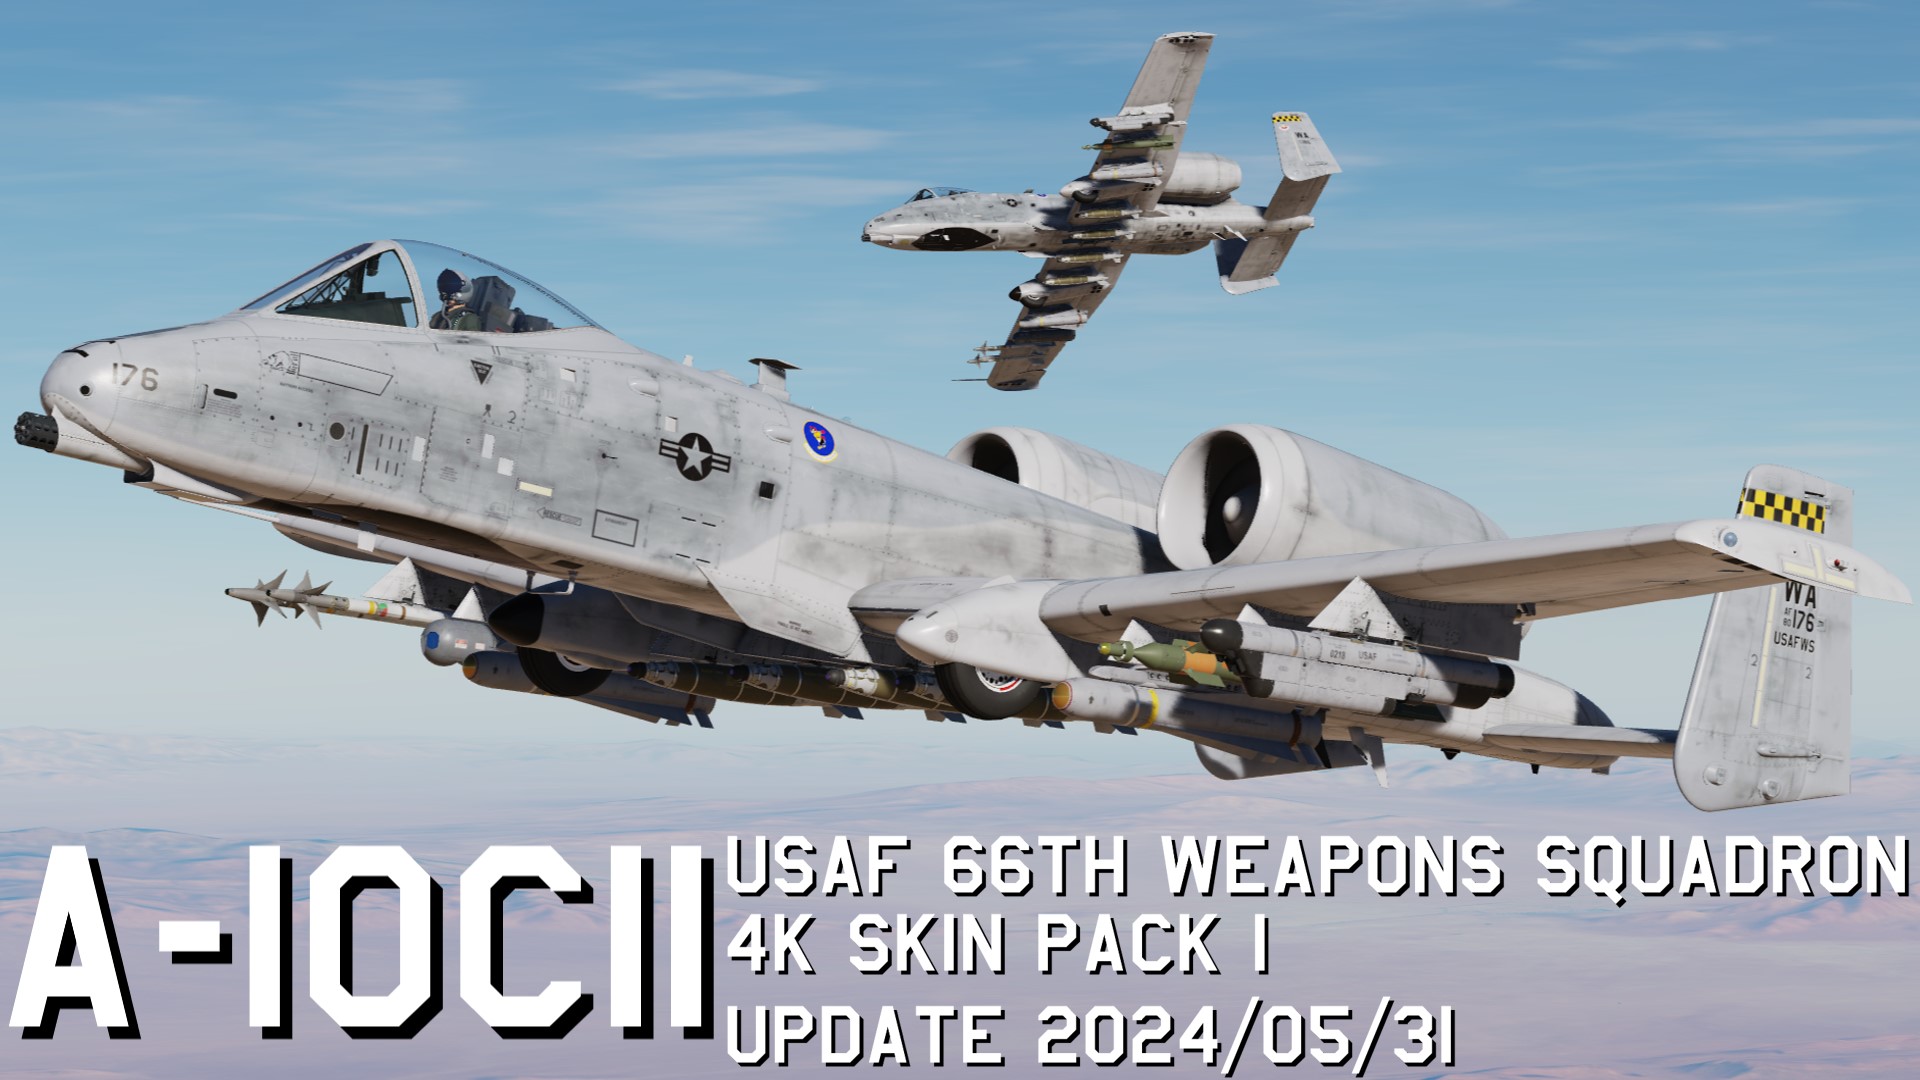 A-10C II  USAF 66th Weapons Squadron 4K Skin Pack 1 update 2024/05/31